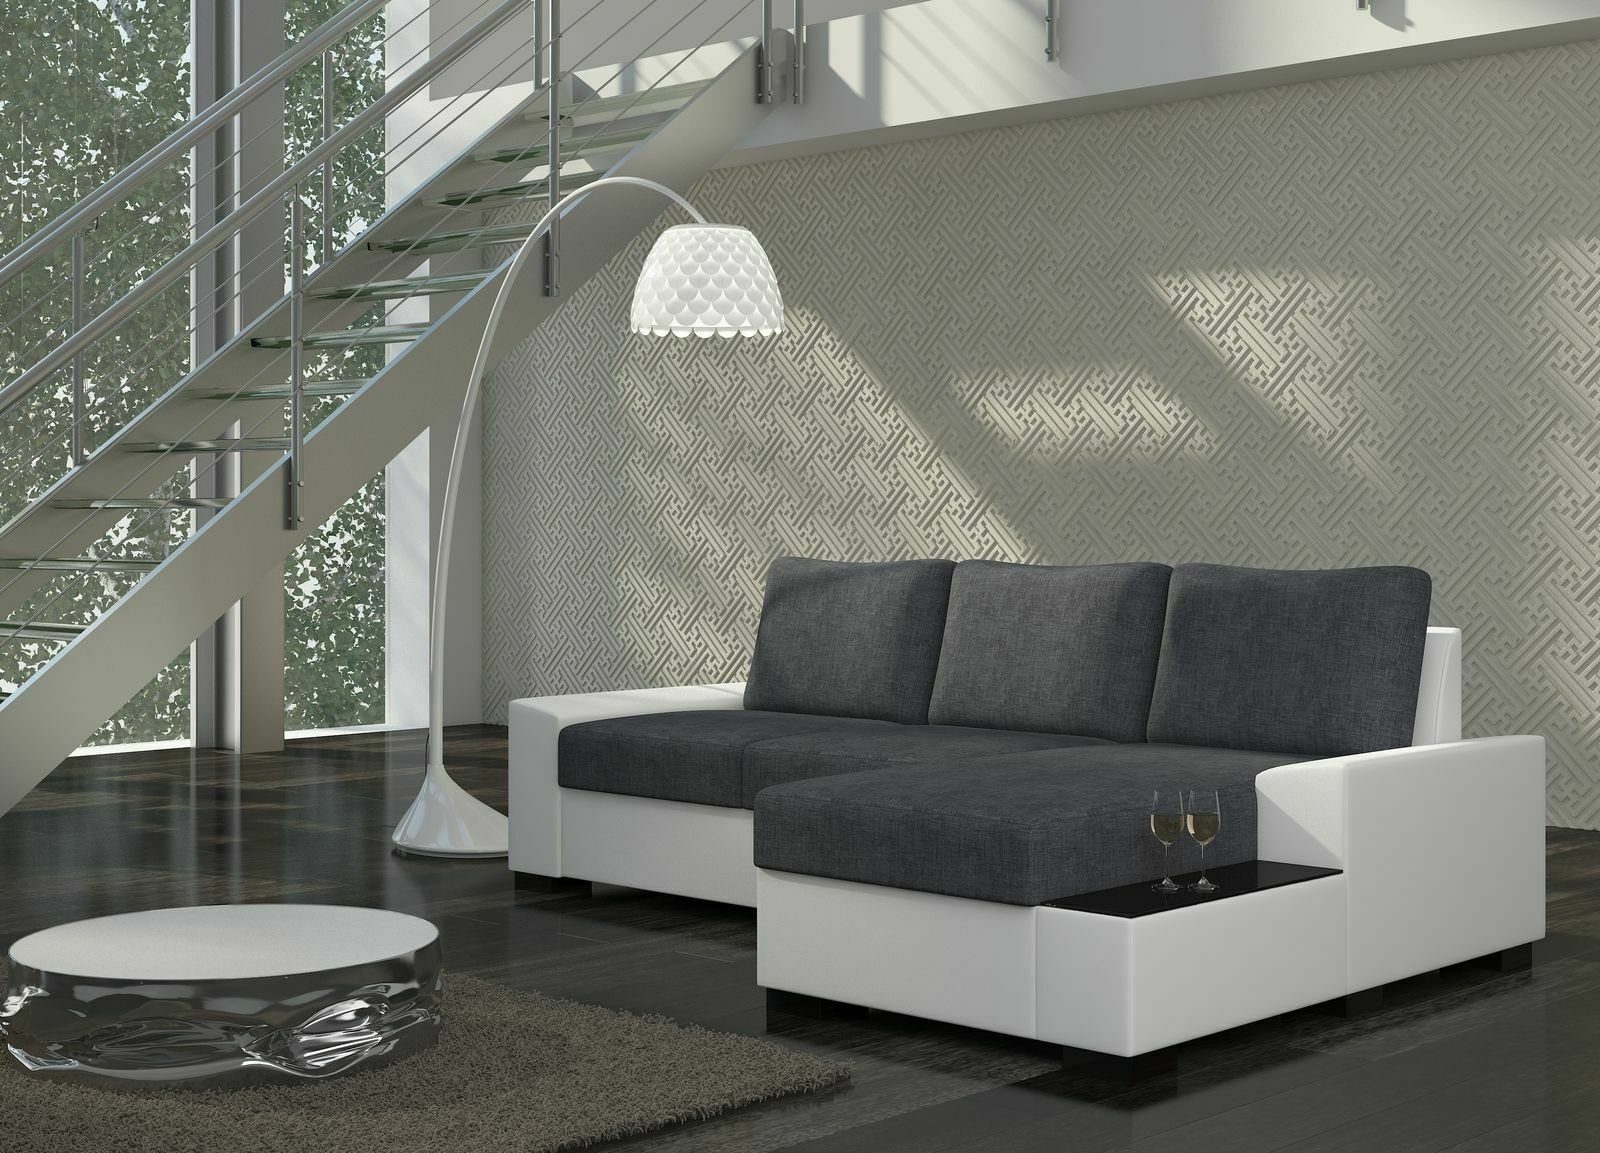 JVmoebel Ecksofa Design Ecksofa Schlafsofa Bettfunktion Sofa Couch Leder Polster, Mit Bettfunktion Schwarz / Weiß